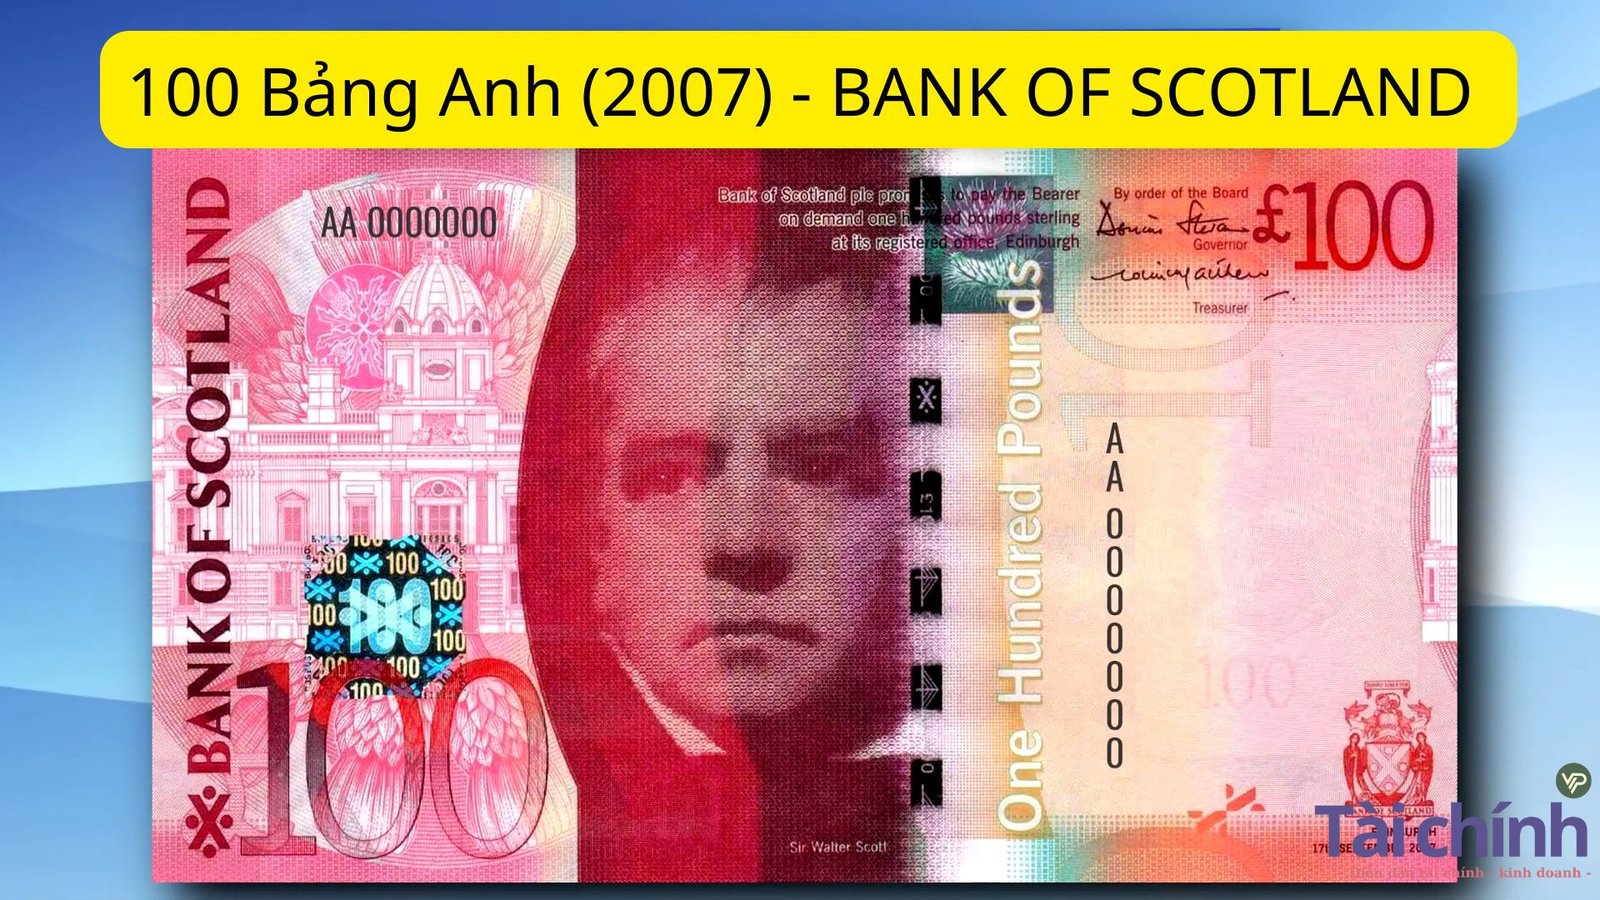 100 Bảng Anh (2007) - BANK OF SCOTLAND